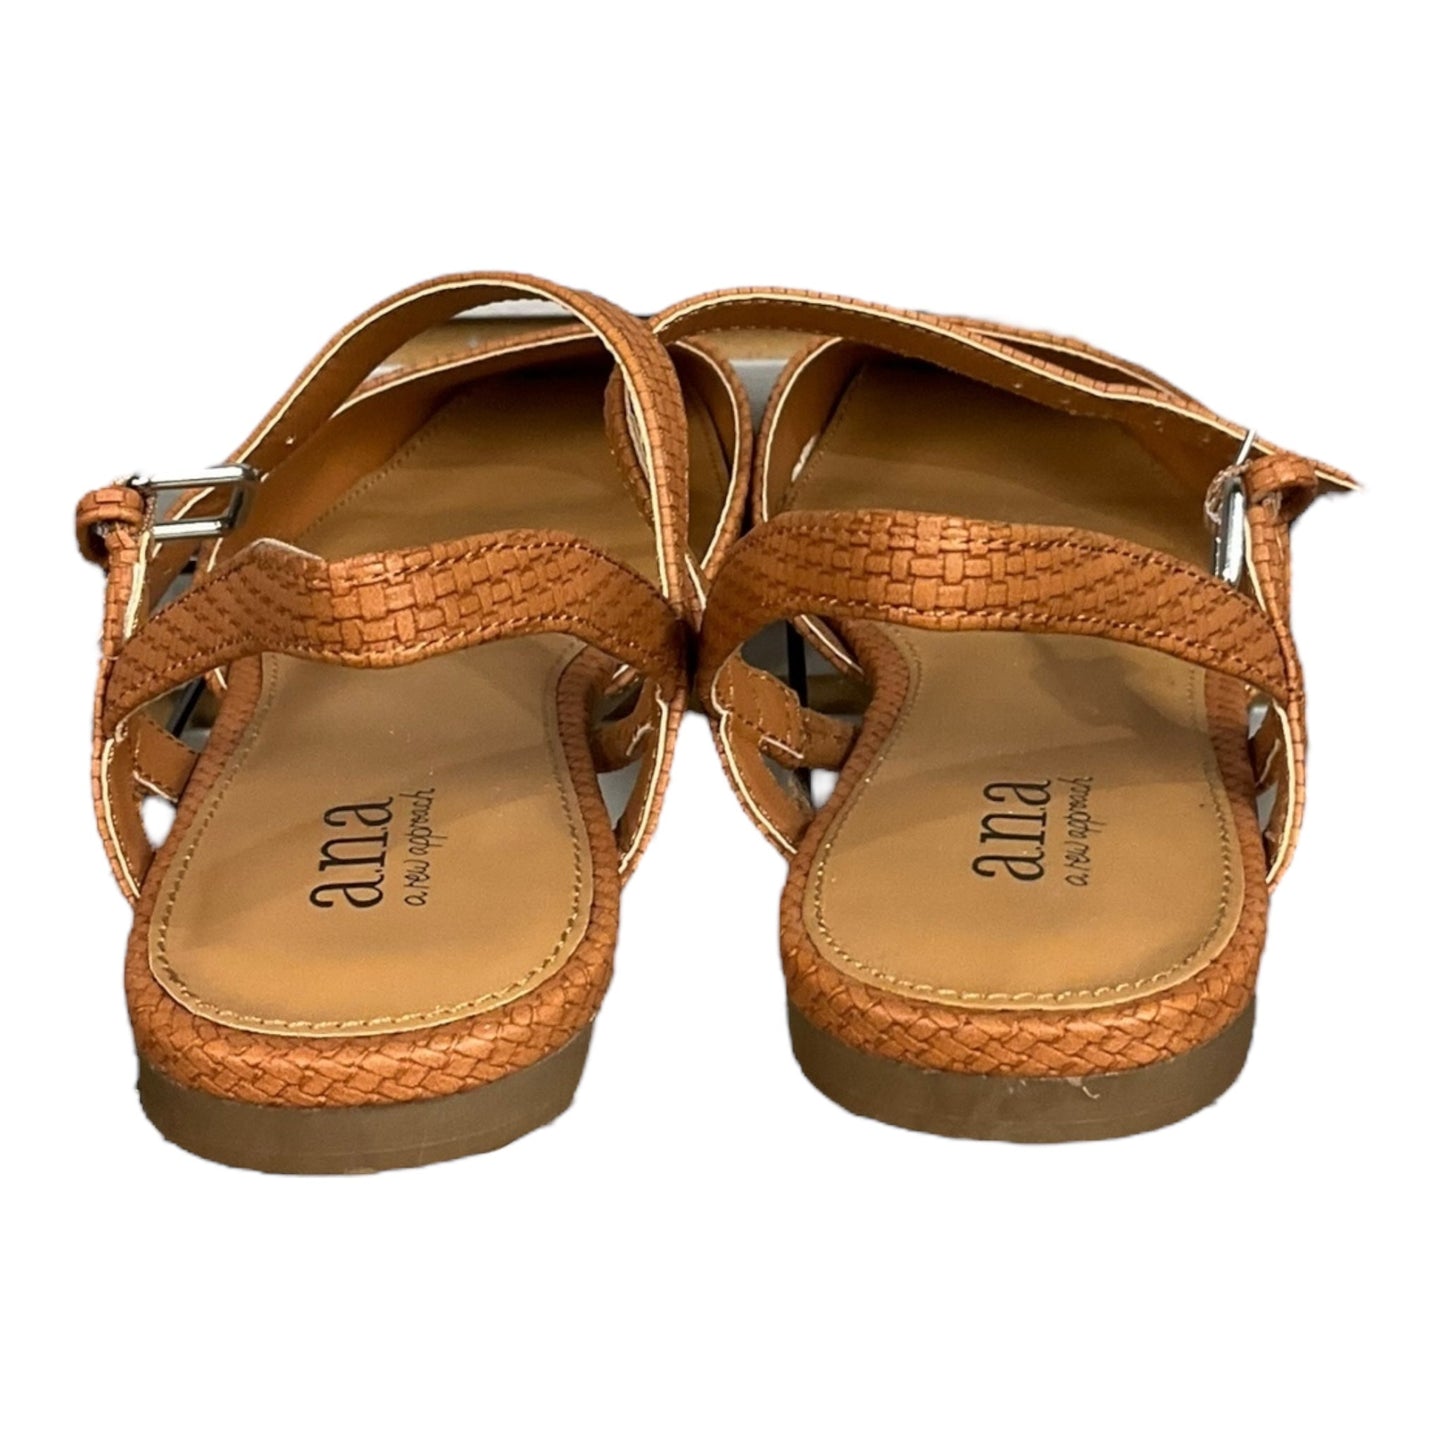 Tan Shoes Flats Ana, Size 6